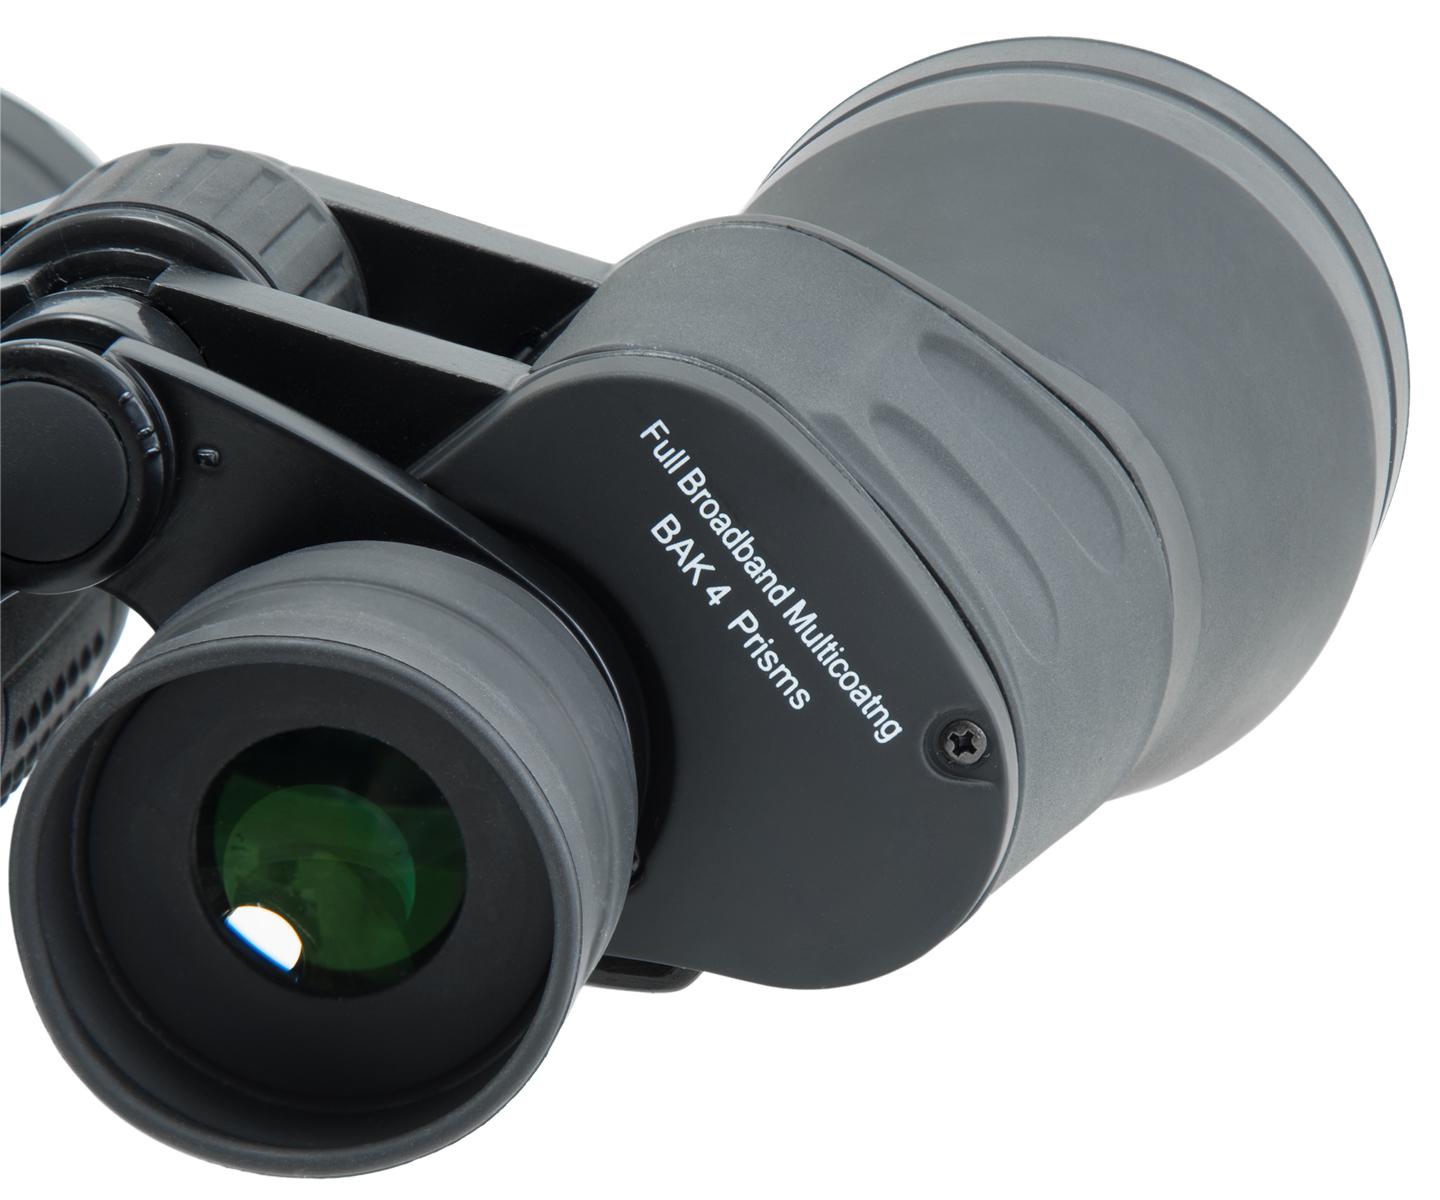  TS-Optics 11x70 LE Porro Prism Binoculars - perfect for twilight and night [EN] 